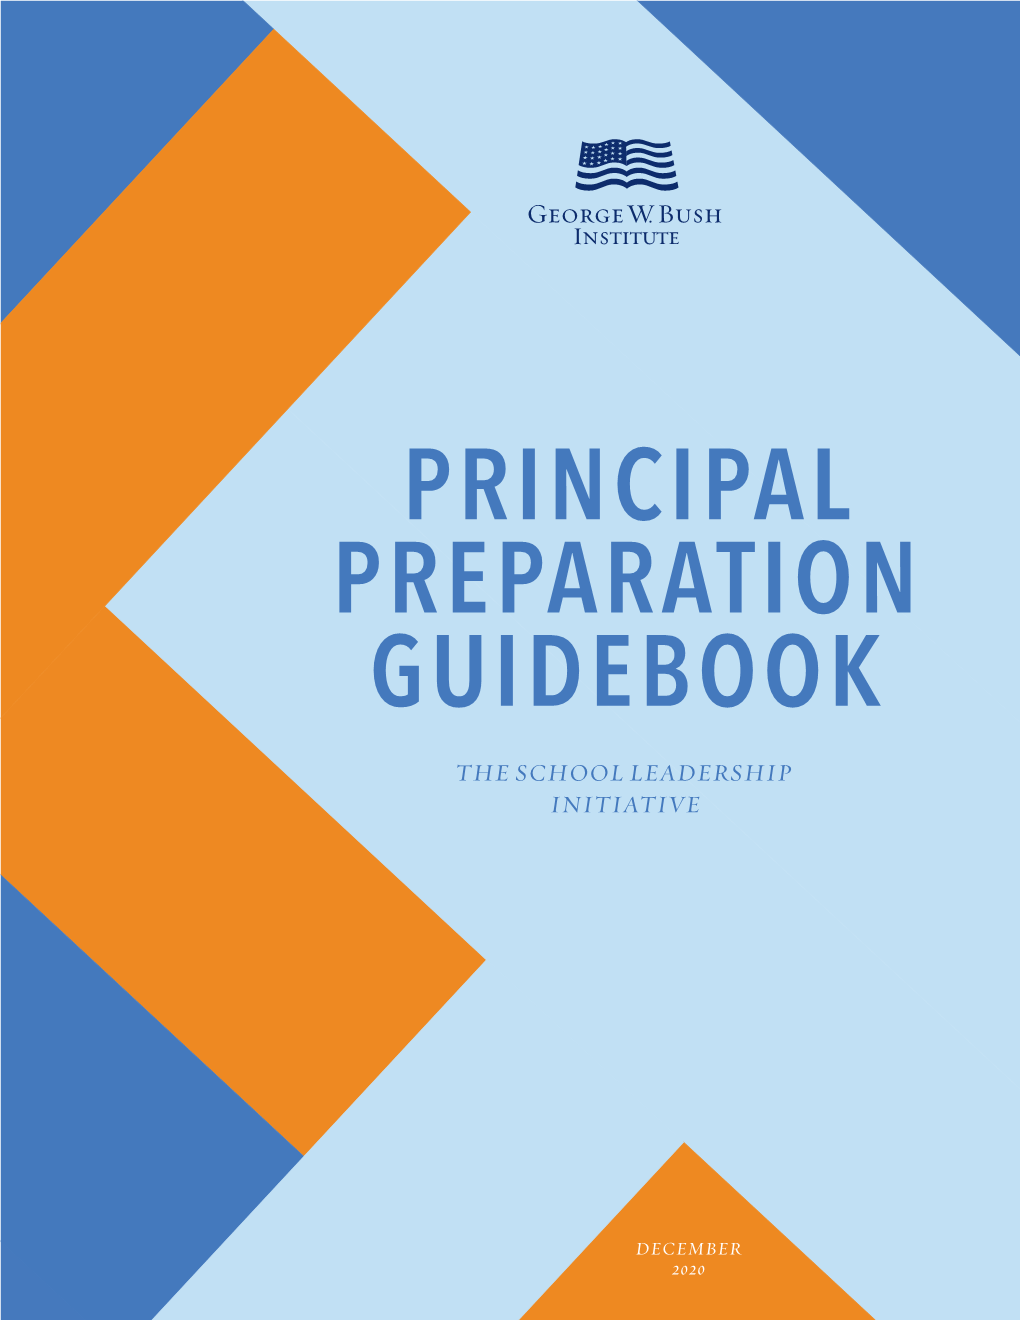 Principal Preparation Guidebook Resource